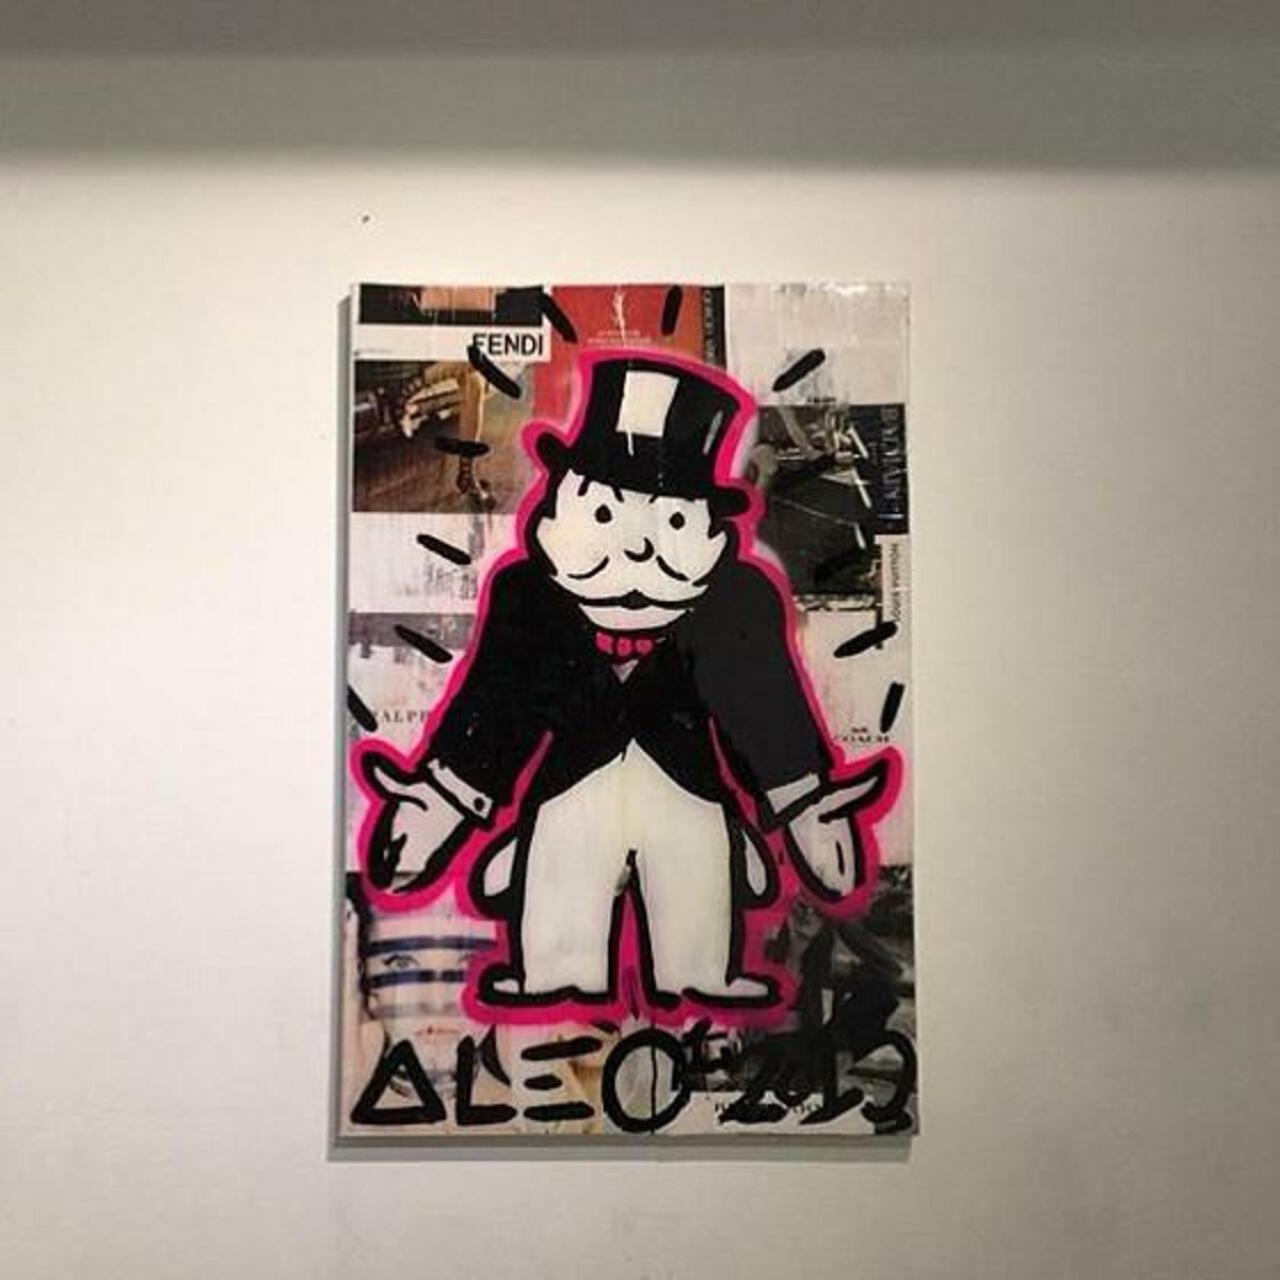 RT @artpushr: via #banksysells "http://bit.ly/1GlzZhC" #graffiti #streetart https://t.co/k2qpp9CSlL